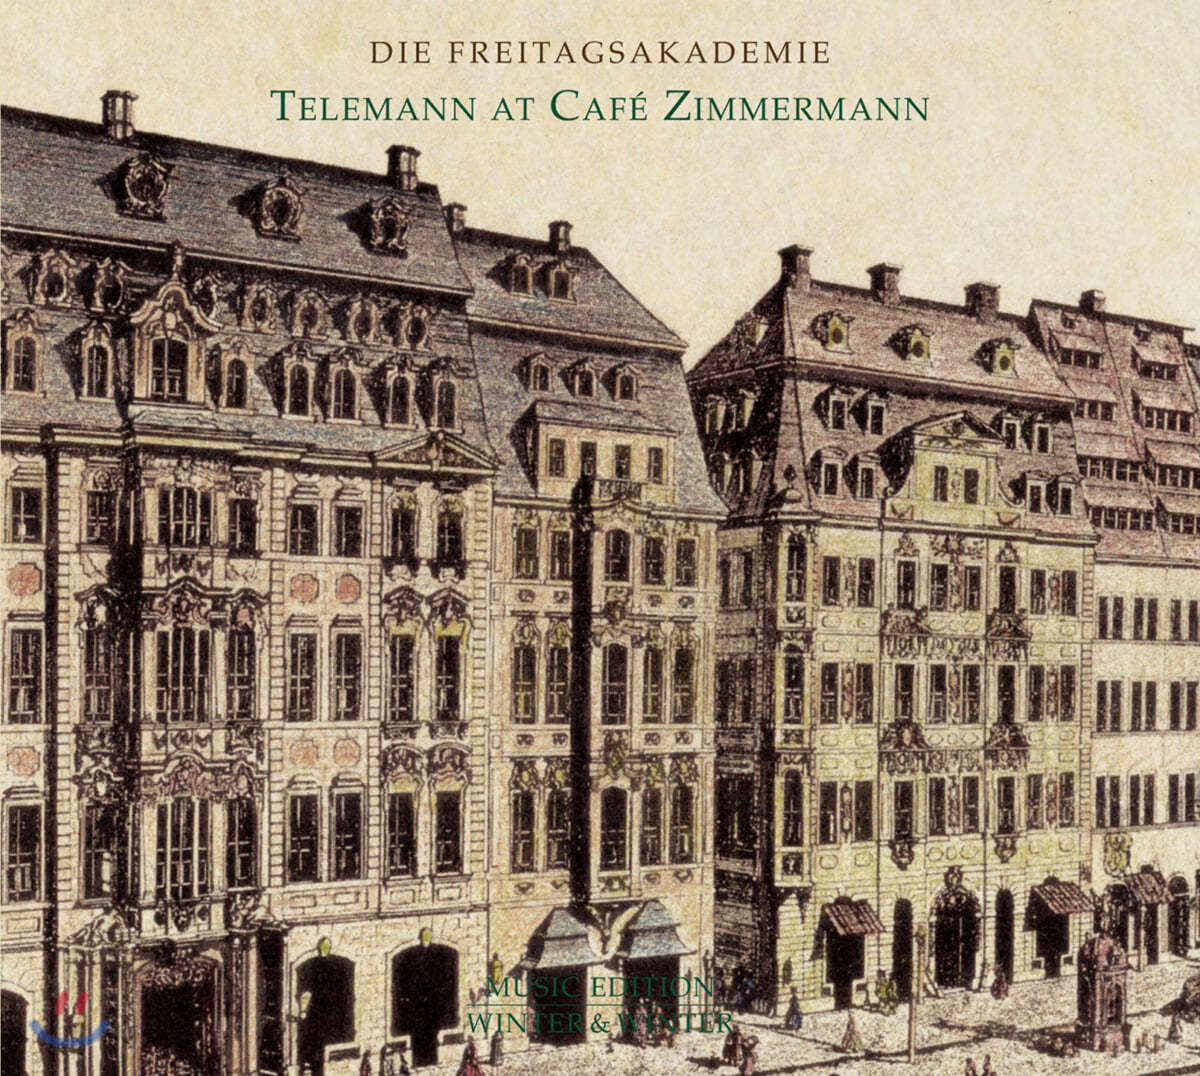 Die Freitagsakademie 카페 짐머만의 텔레만 - 텔레만의 서곡, 협주곡, 모음곡, 소나타 (Telemann at Cafe Zimmermann)